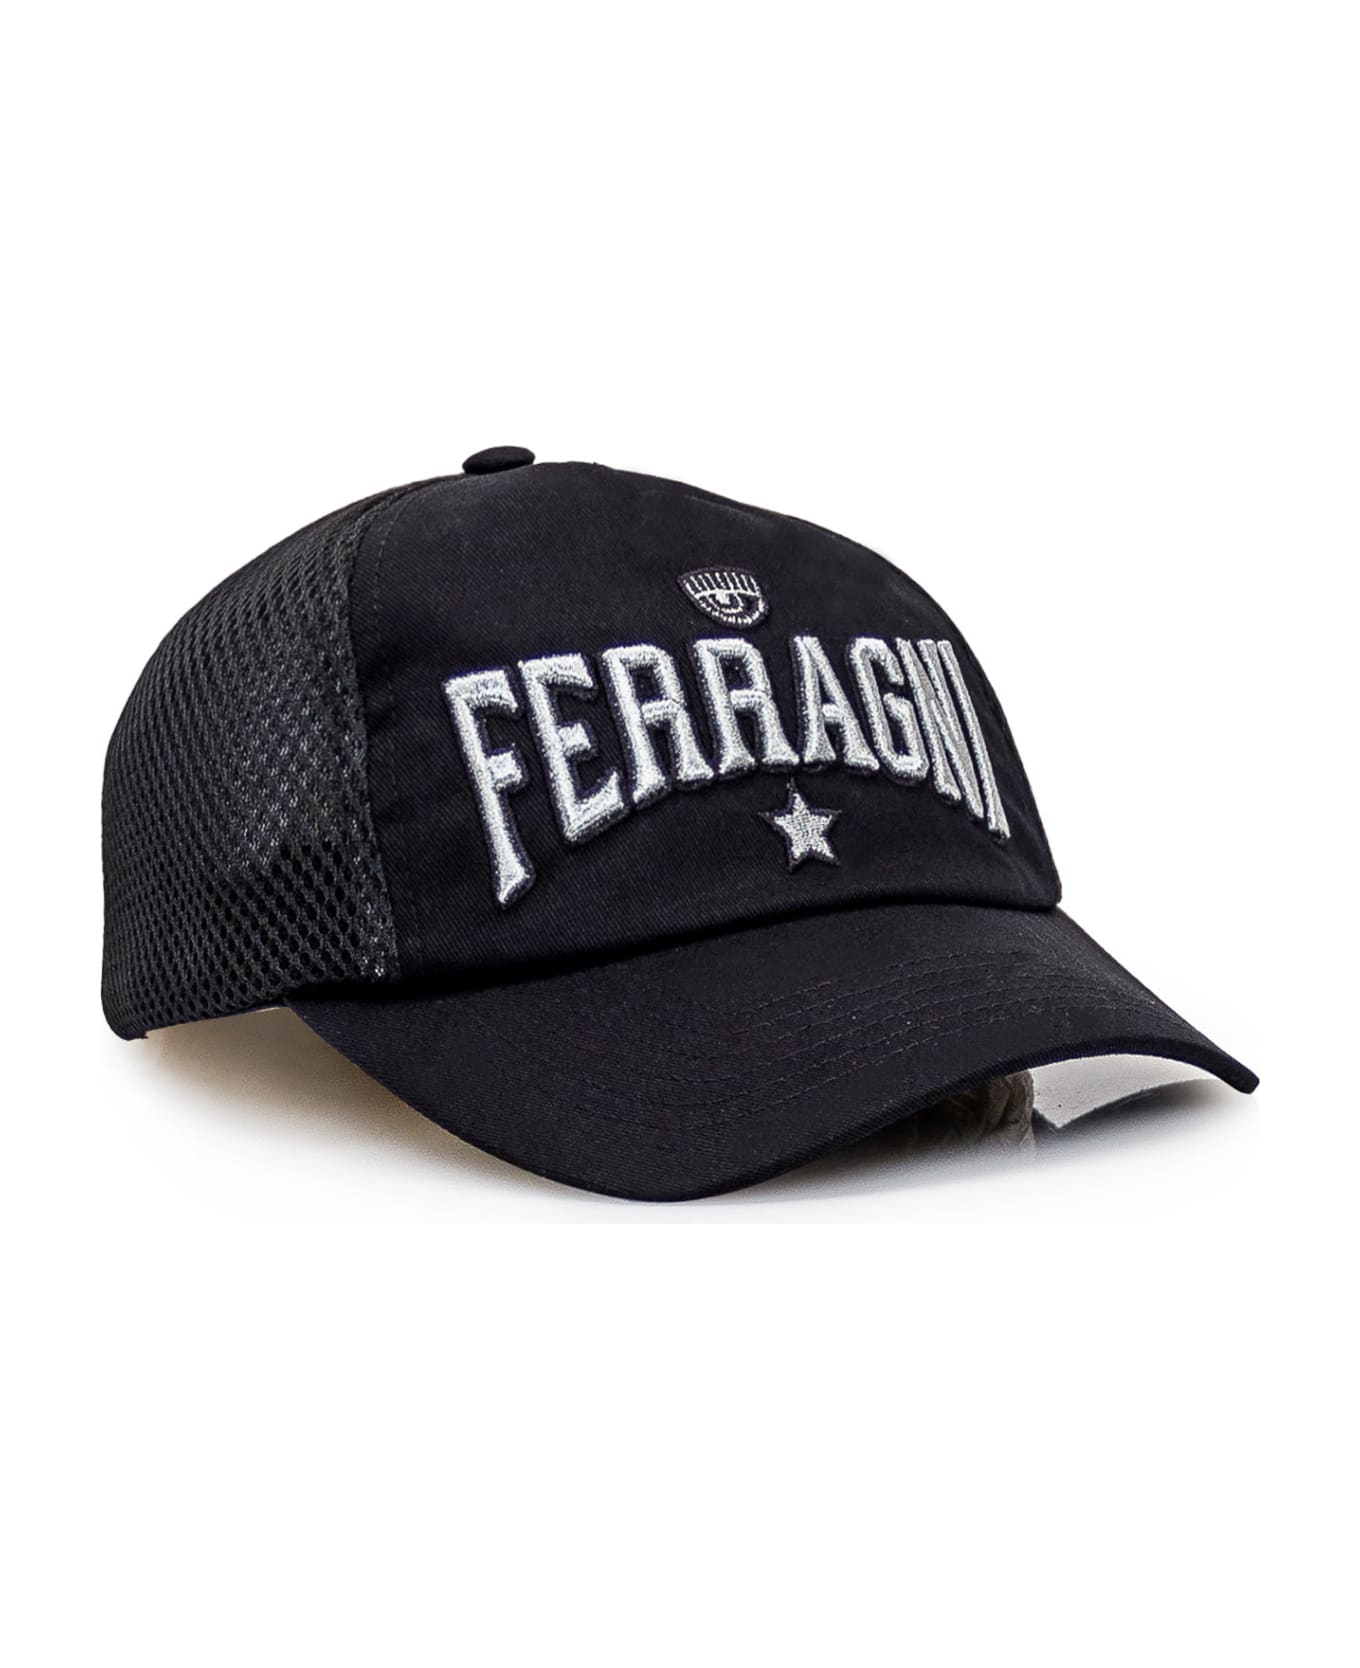 Chiara Ferragni Logo Cap - BLACK 帽子